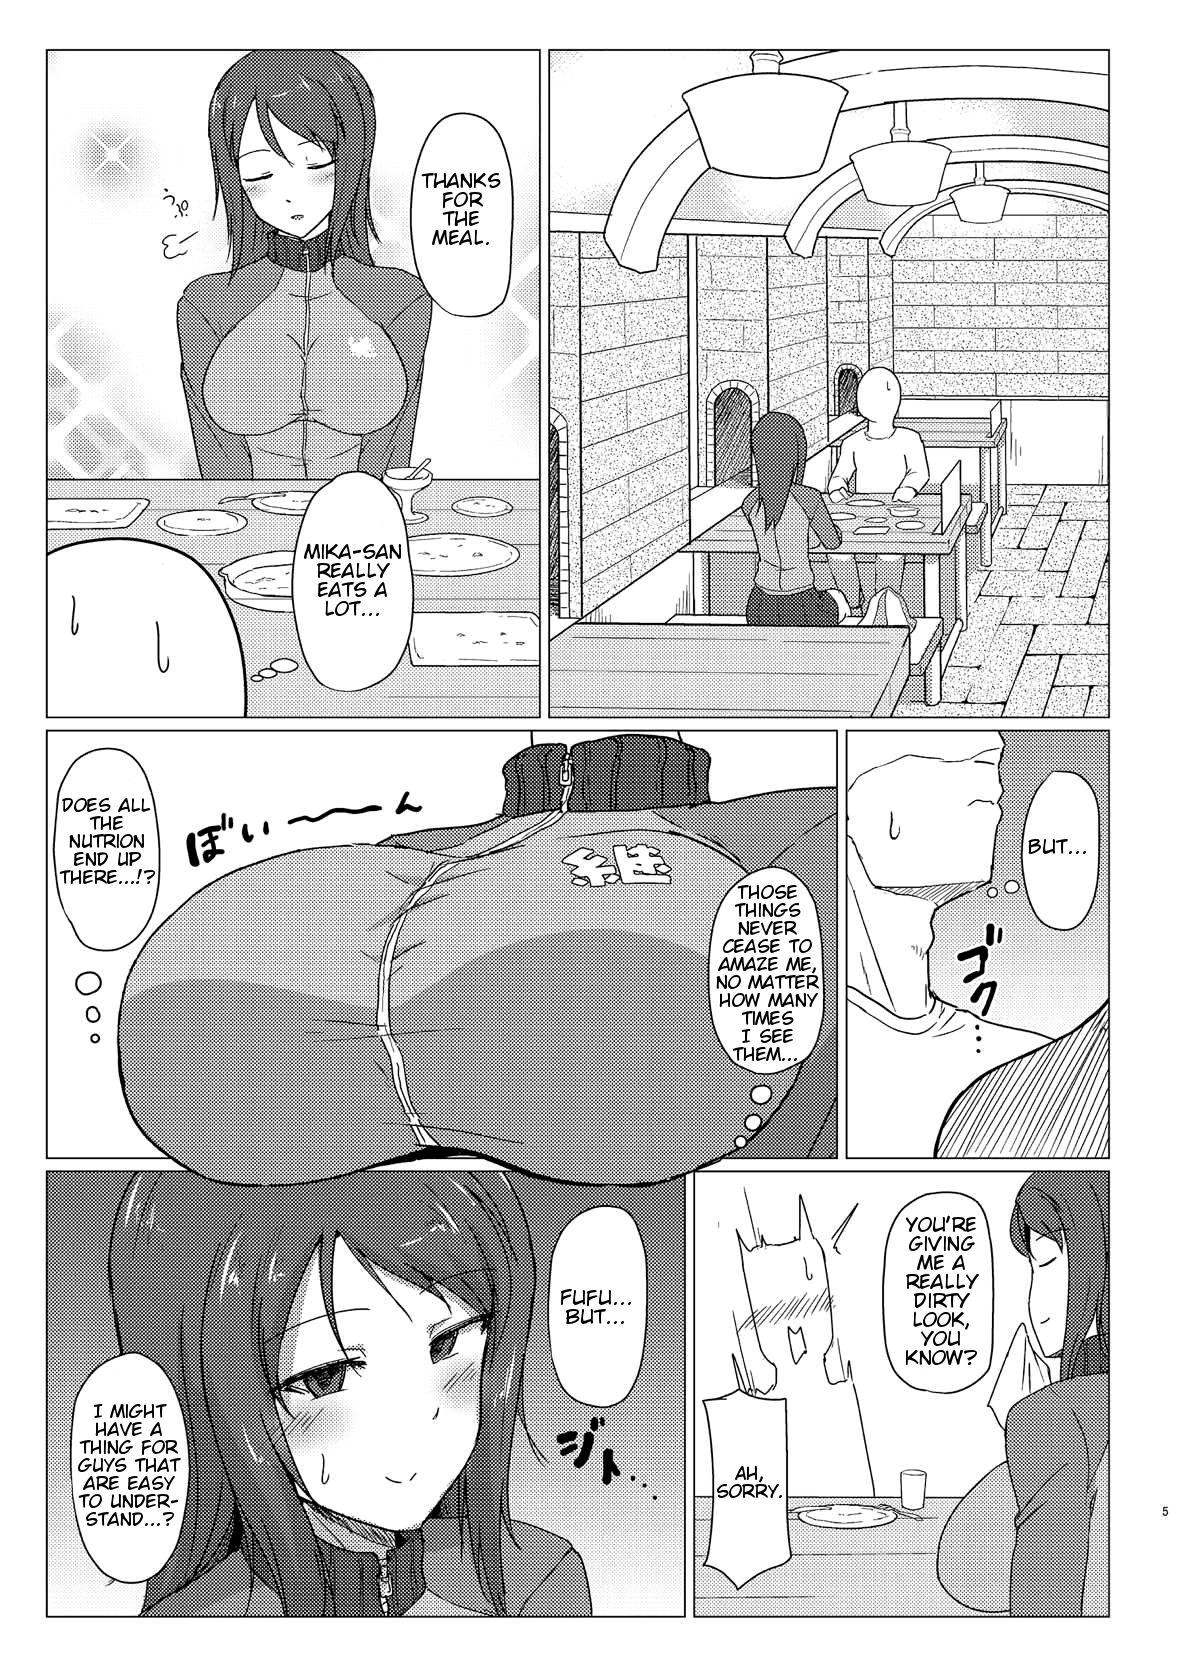 Tease Mika-san to Toilet Sex - Girls und panzer Step - Page 4